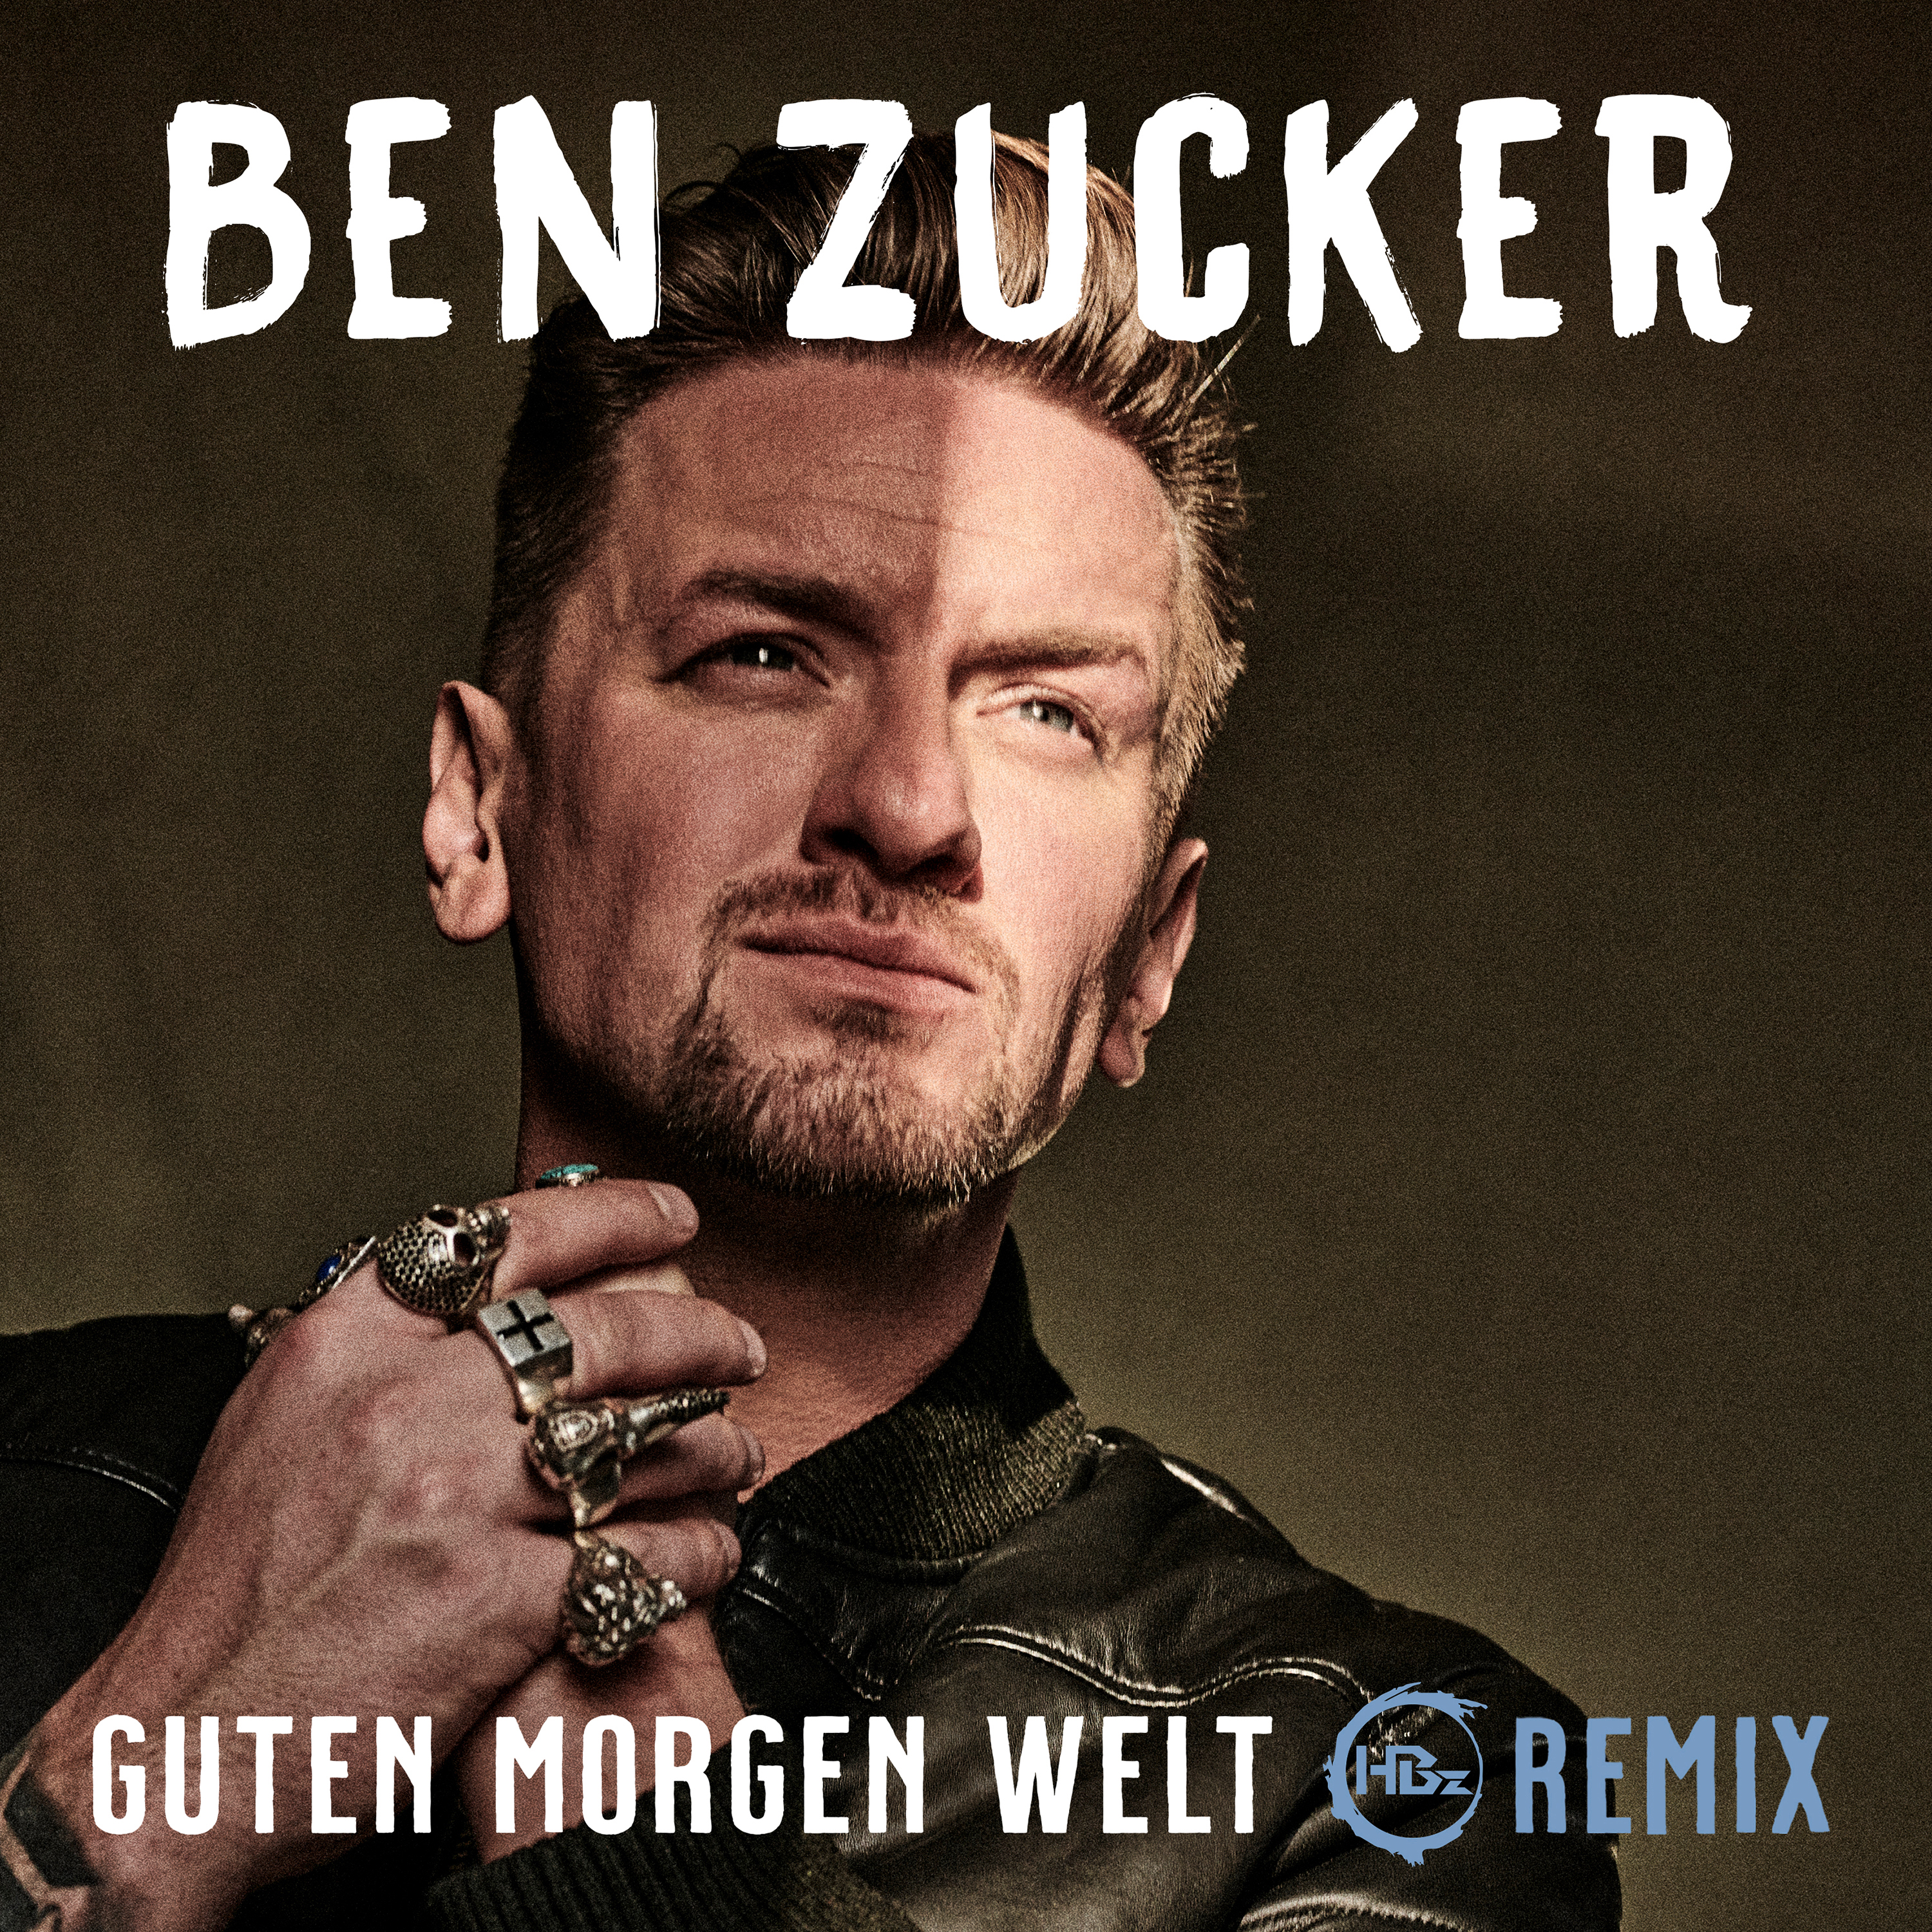 Biete Ben Zucker Cd Unterhaltung Musik & Video Musik CDs 